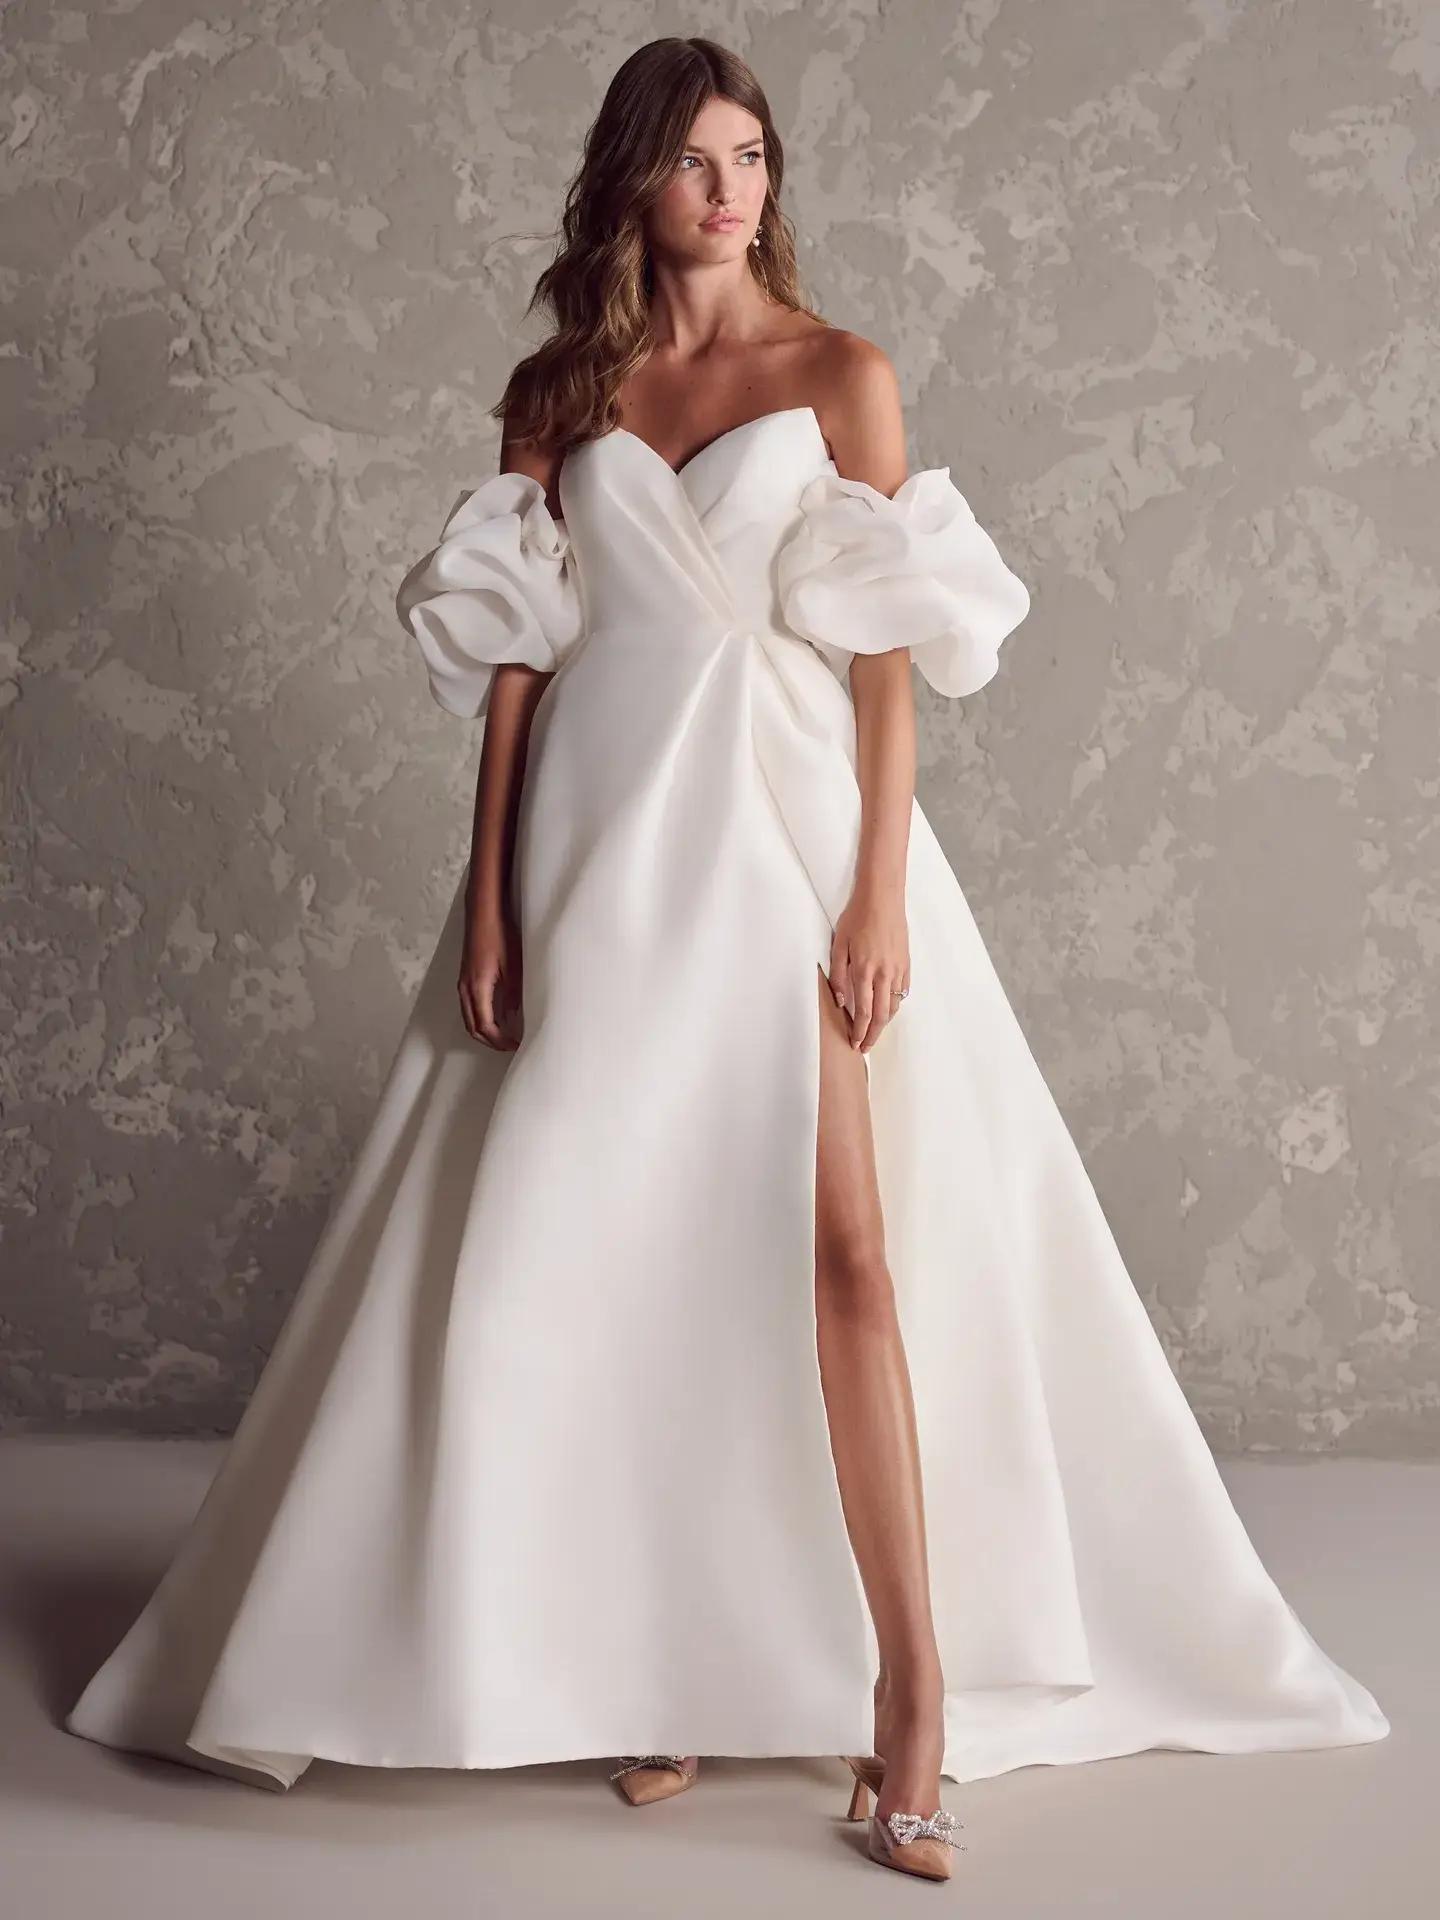 Exploring Creative Sleeve Styles in Modern Wedding Dresses Image